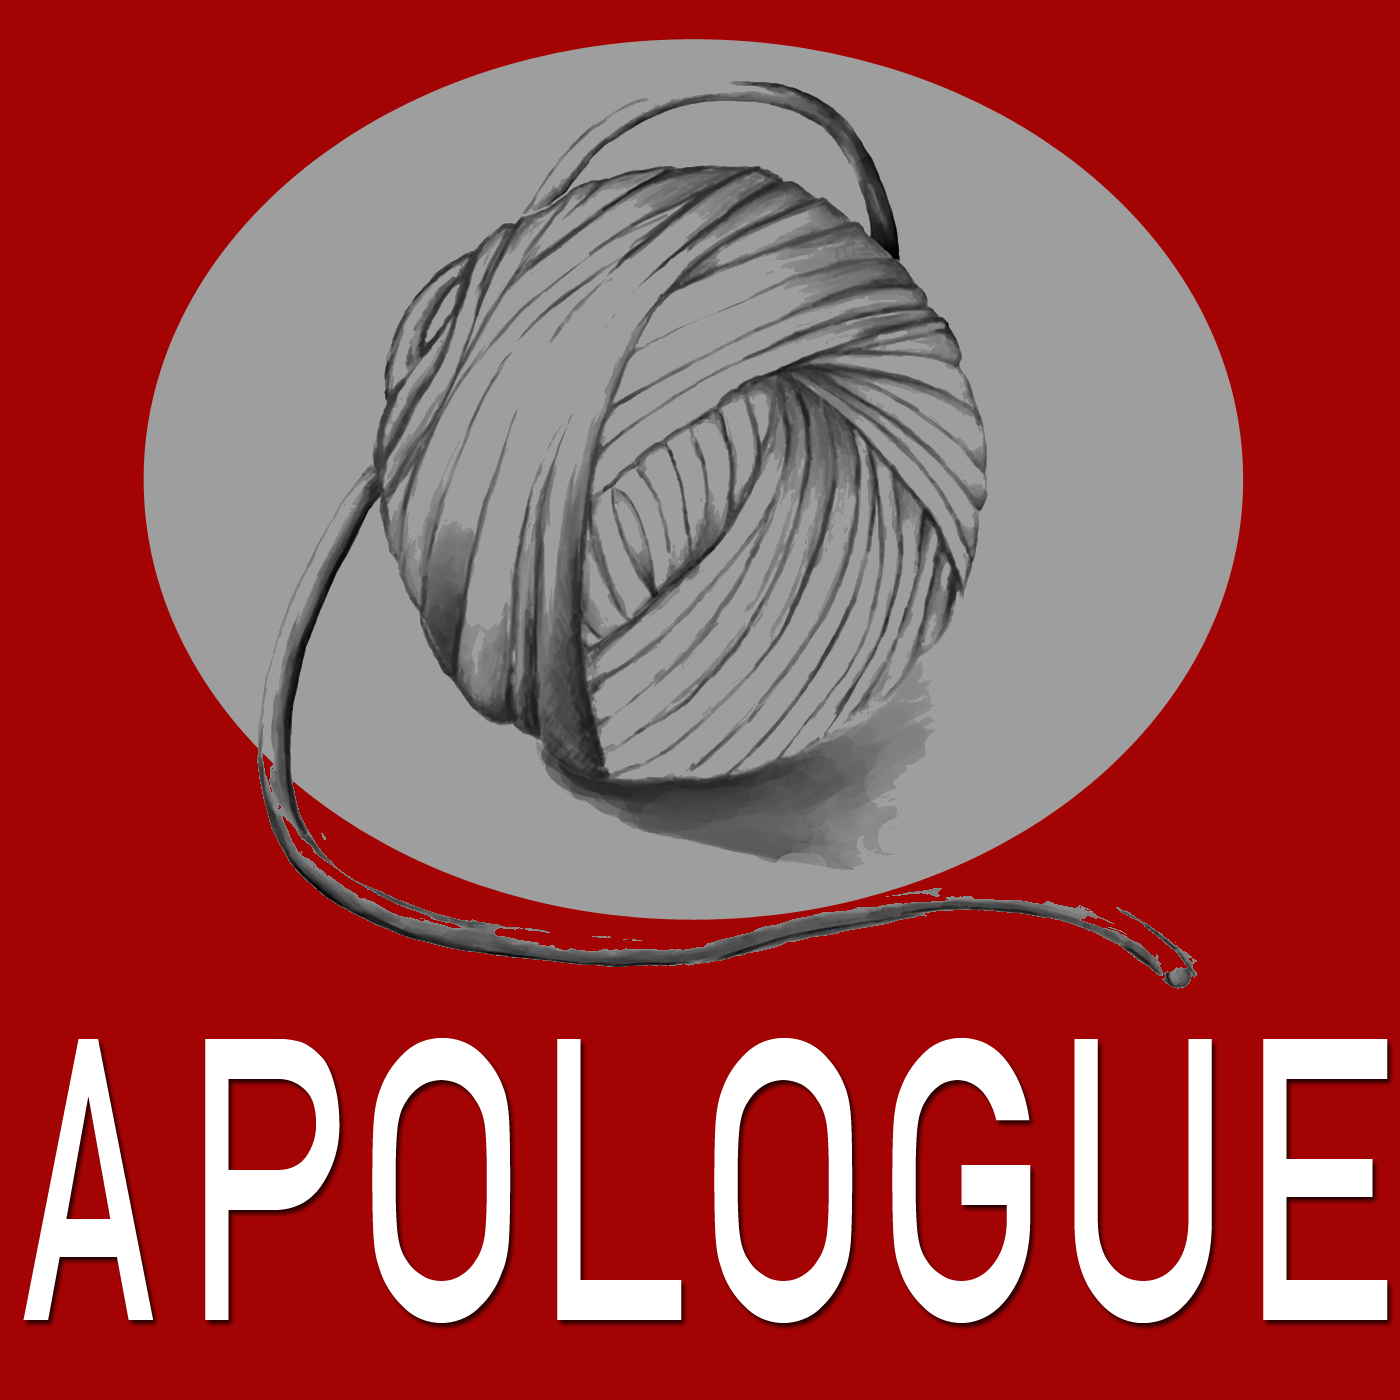 apologue_logo2.png